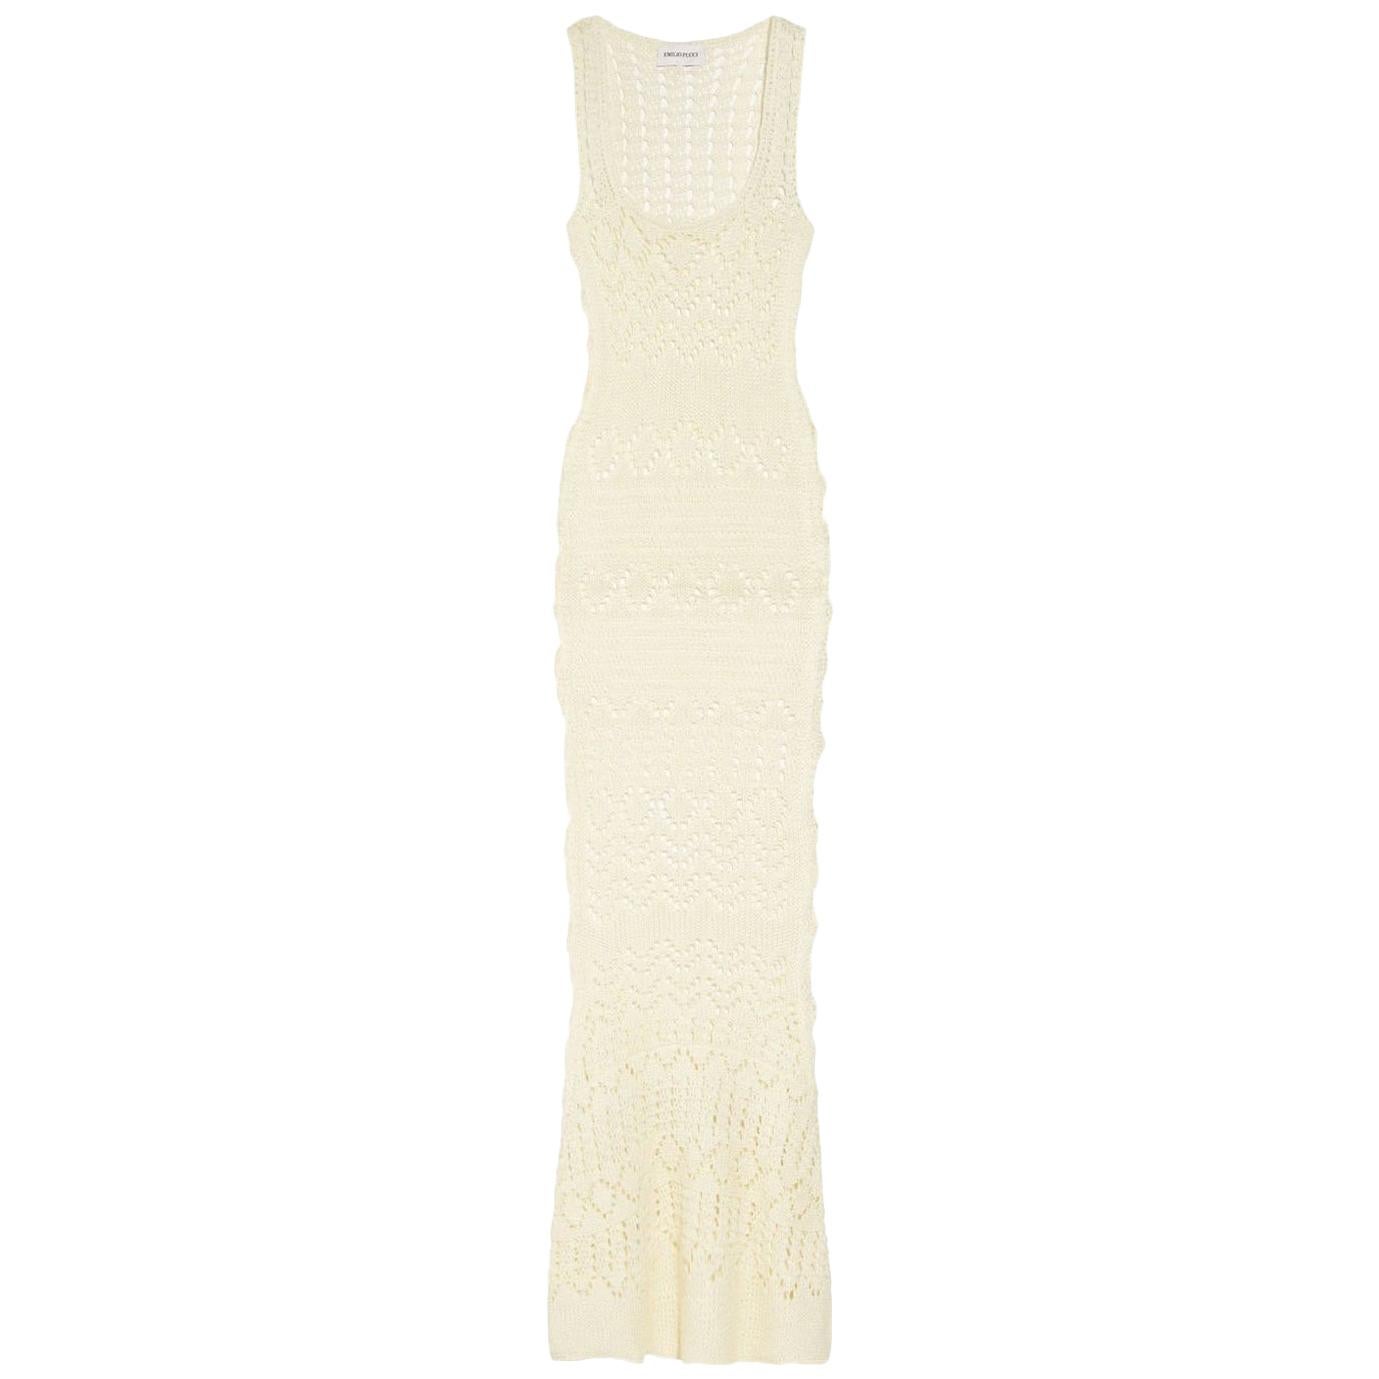 UNWORN Emilio Pucci Peter Dundas Studded Crochet Knit Maxi Dress 42 Wedding